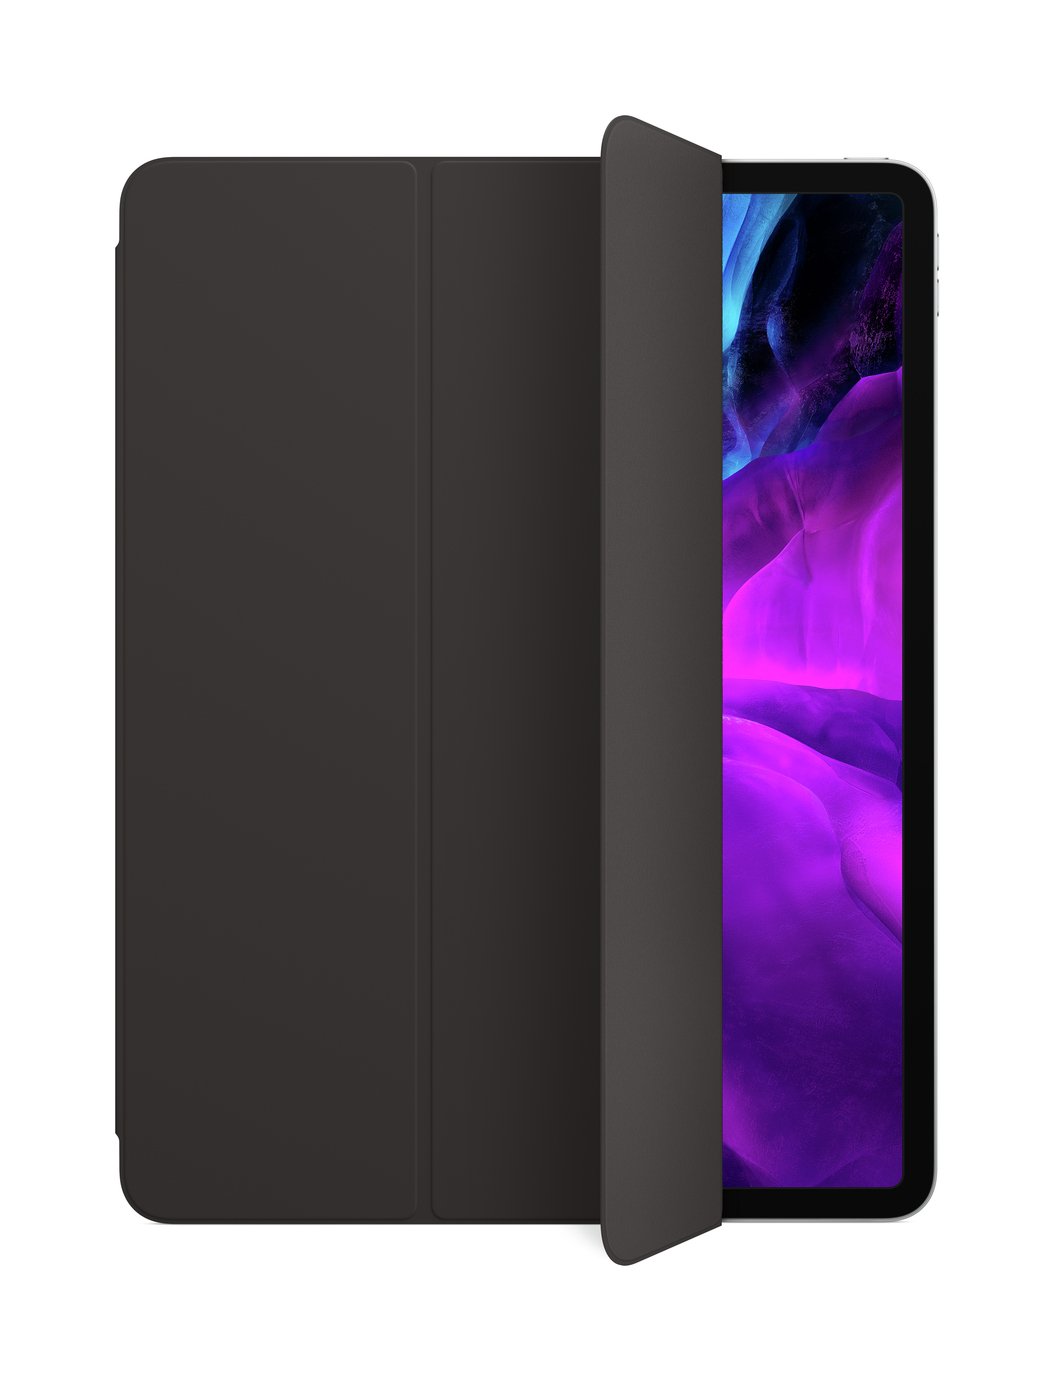 Apple iPad Pro 12.9 Inch Smart Folio Tablet Case Review